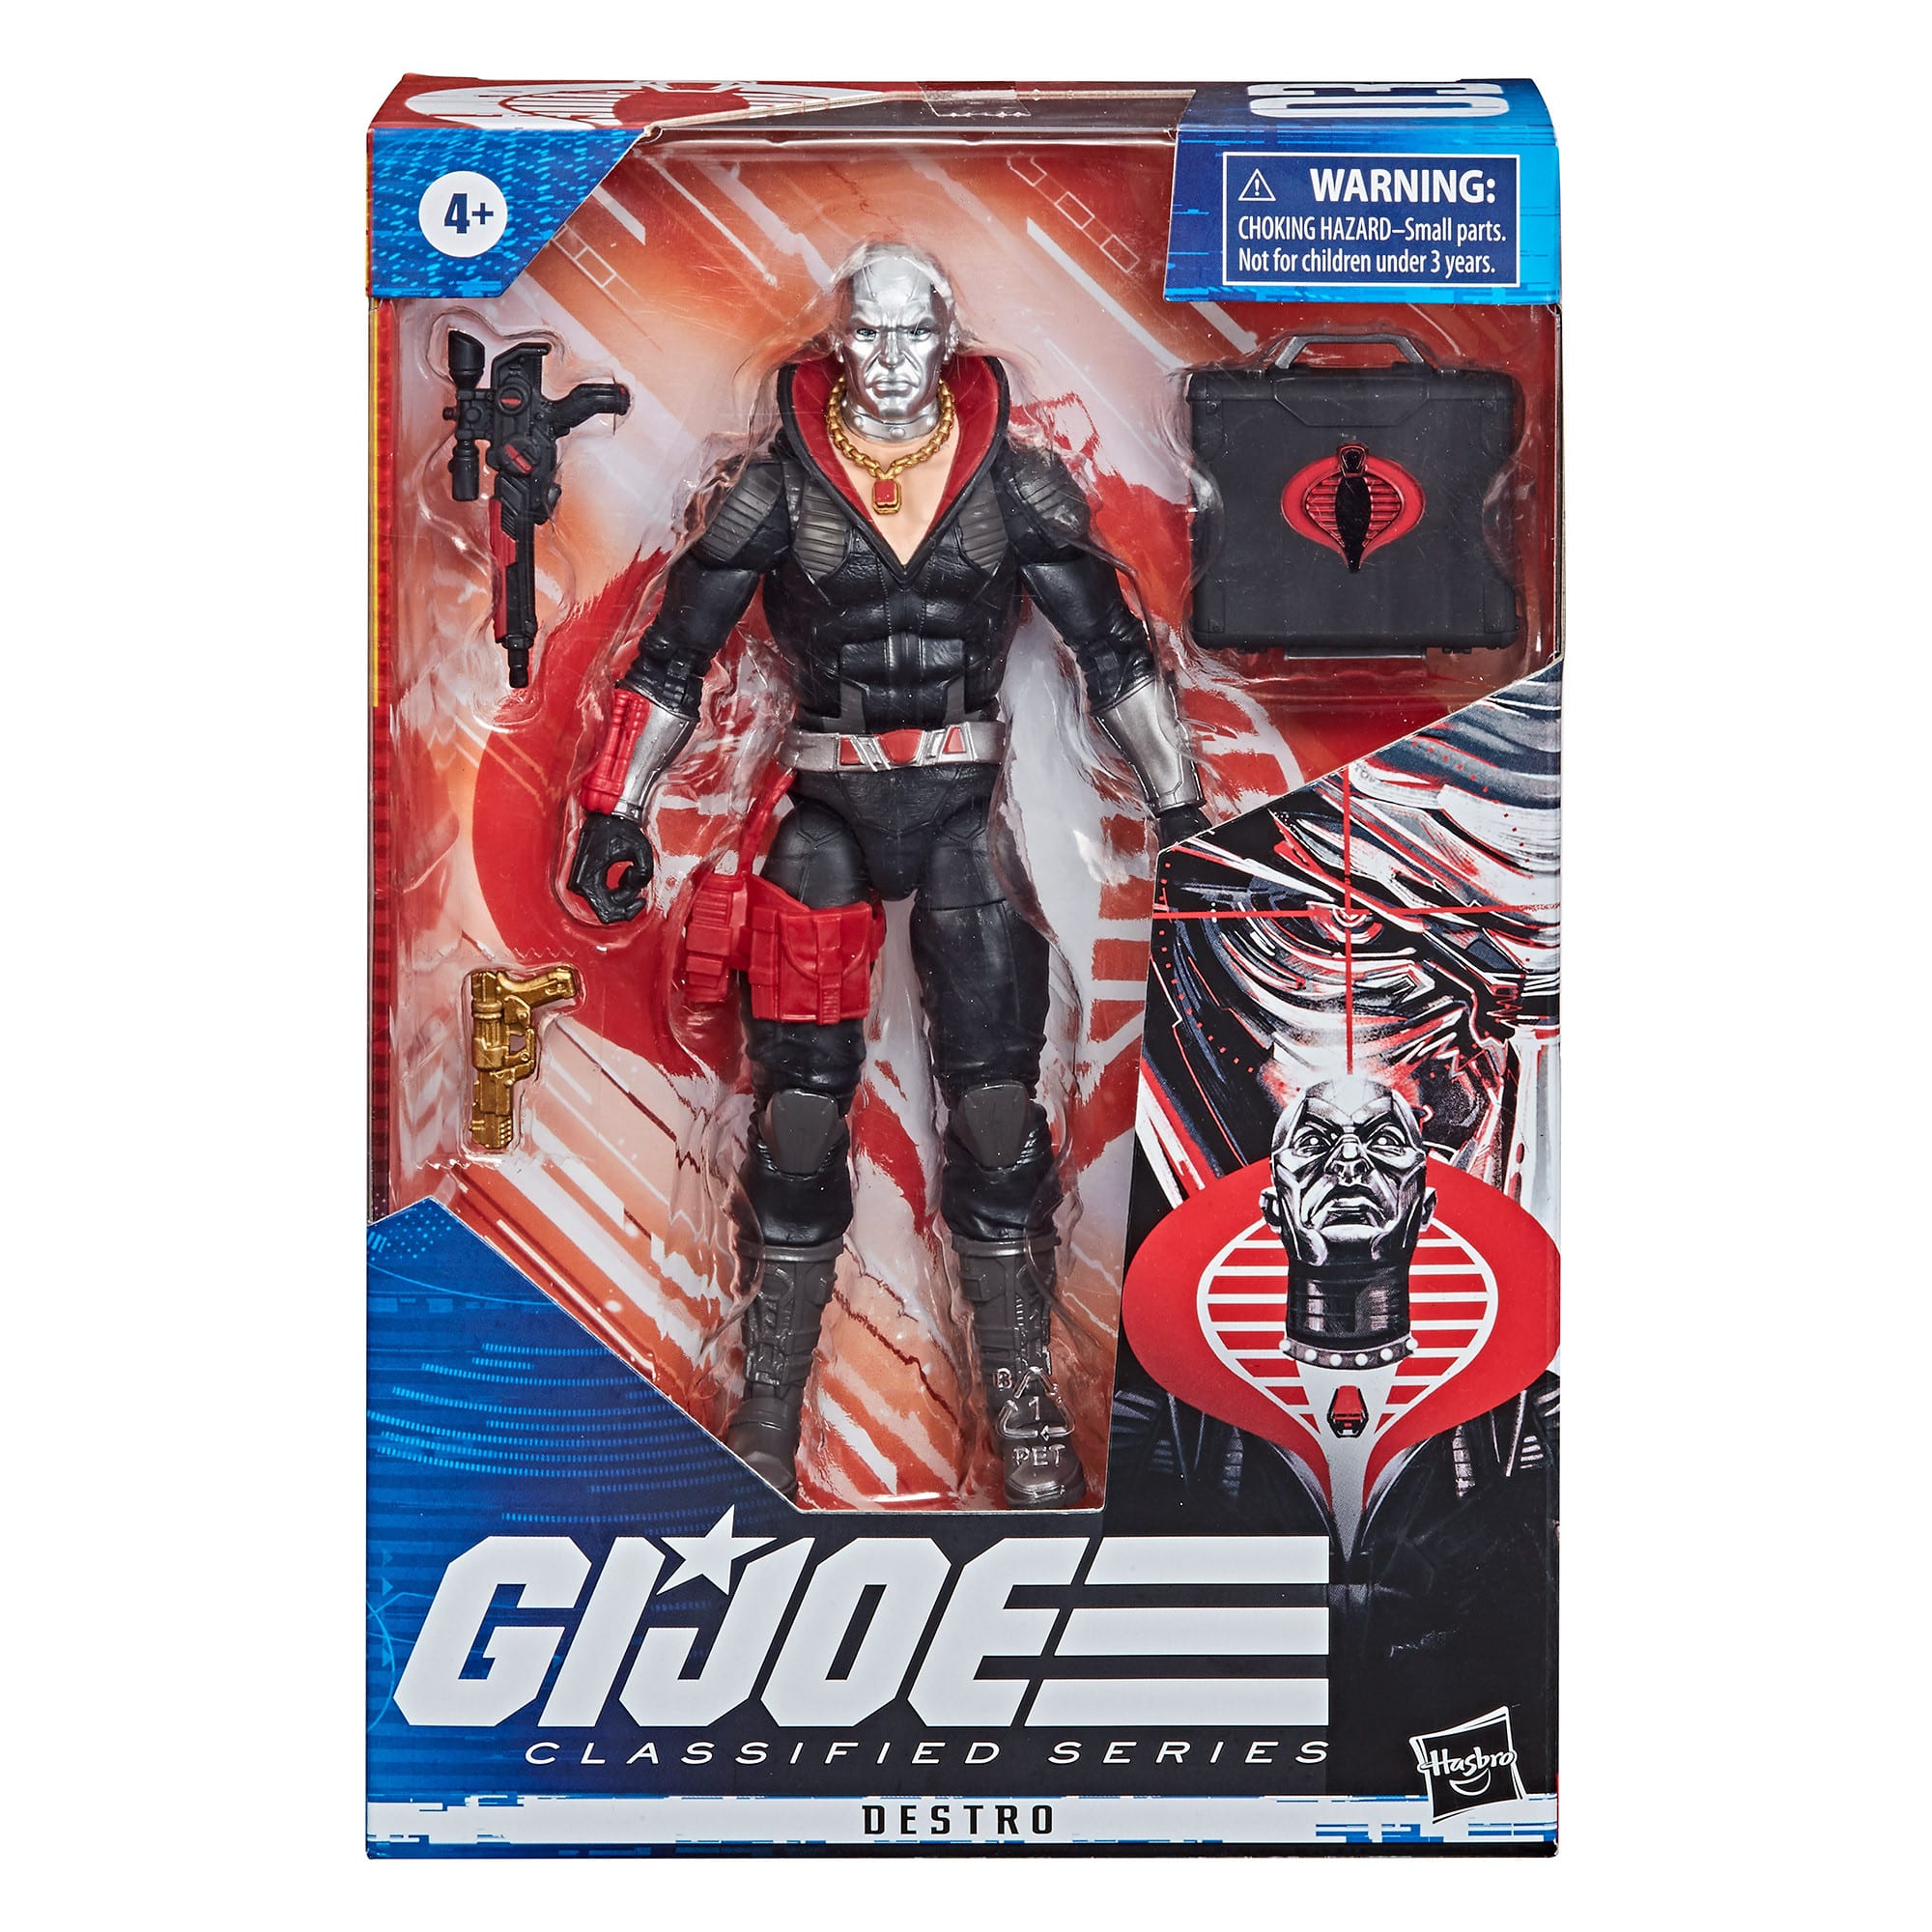 GI Joe - Classified Series - Destro Action Figure